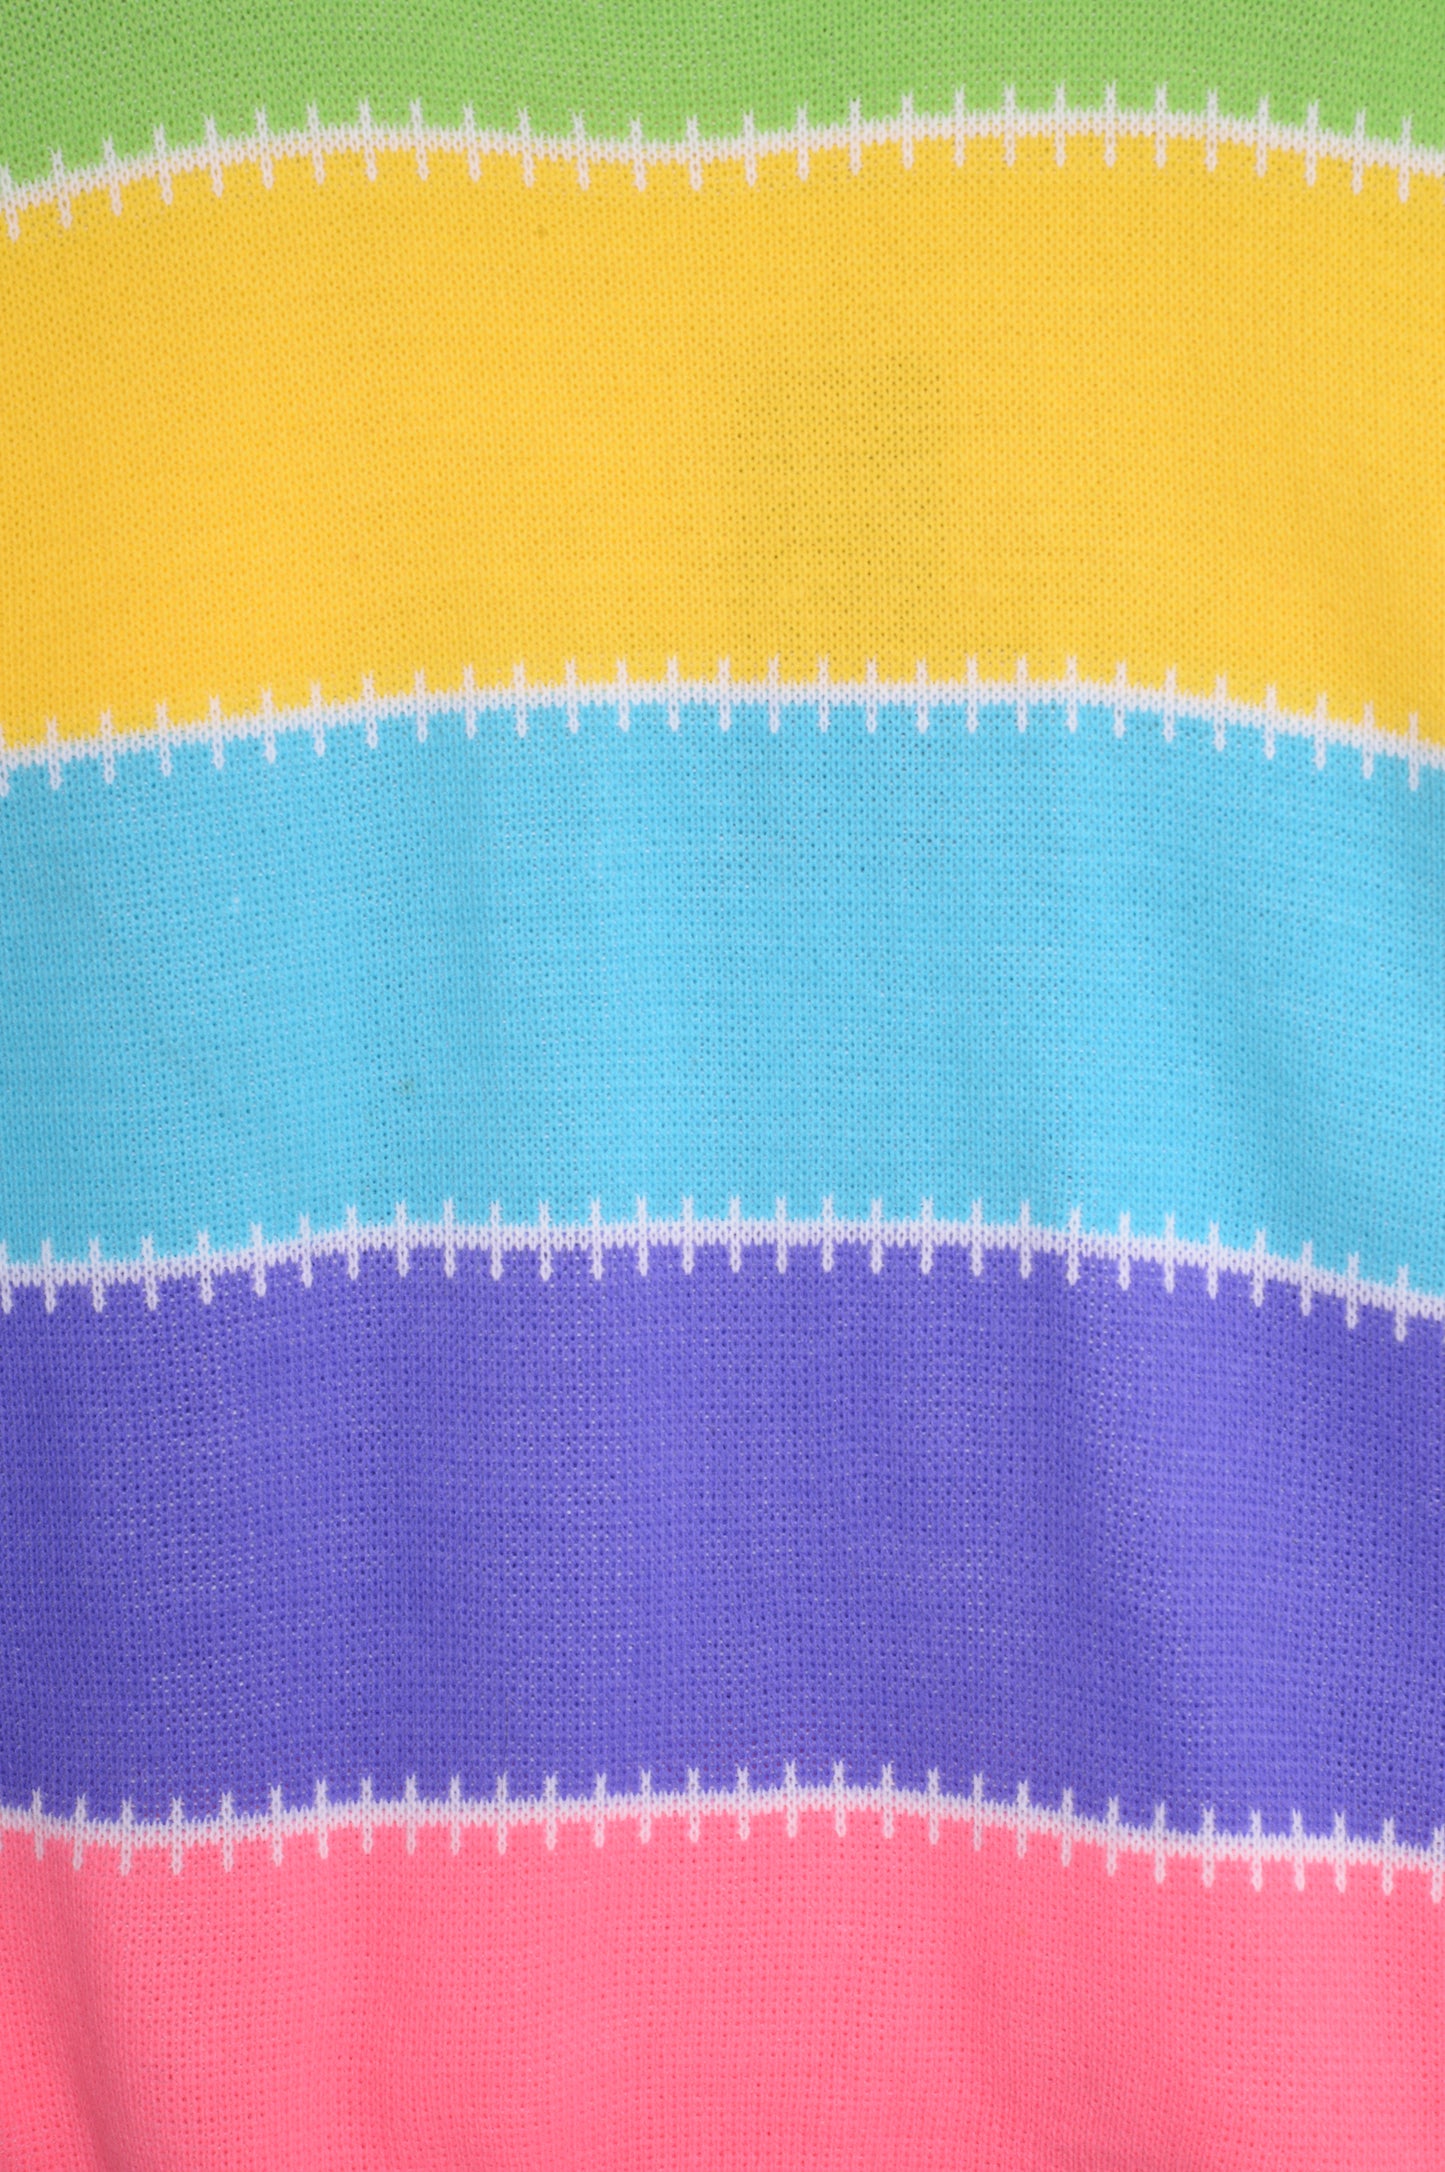 1990s Rainbow Stripe Sweater